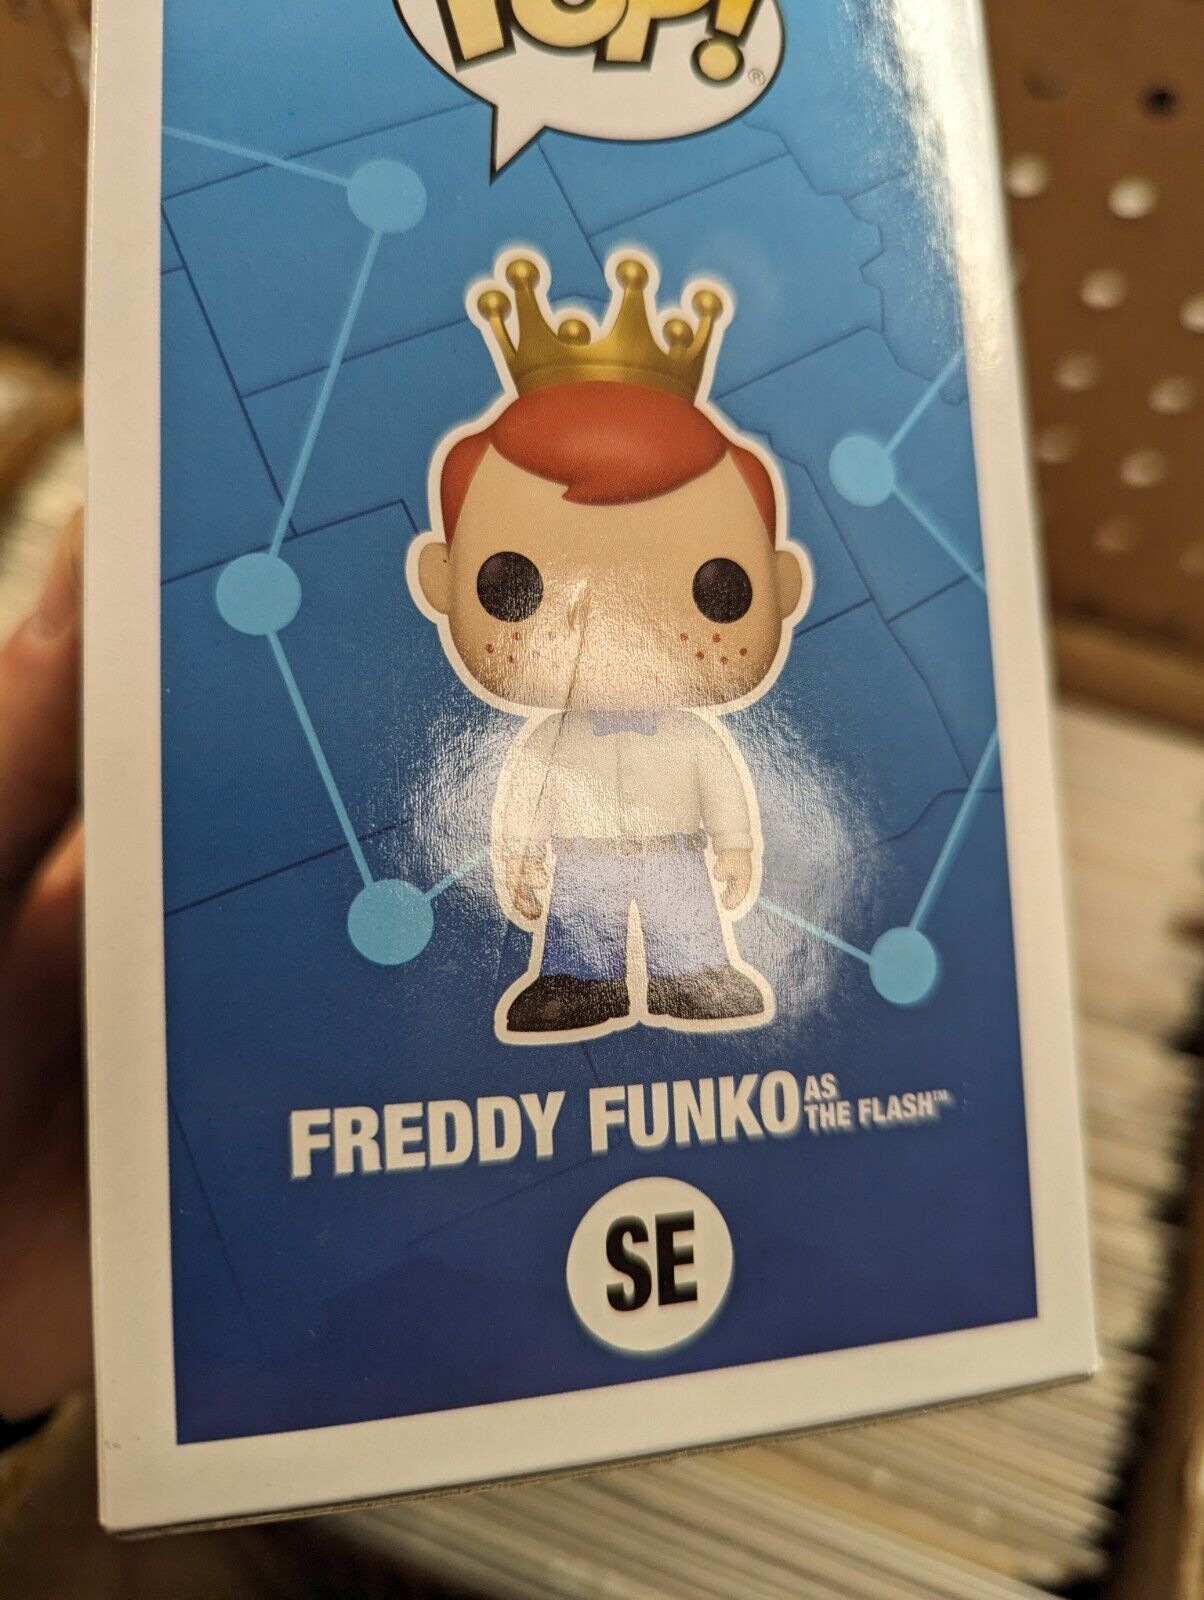 Funko Pop Freddy Funko As The Flash SE Chase Reverse Flash Fun On The Run